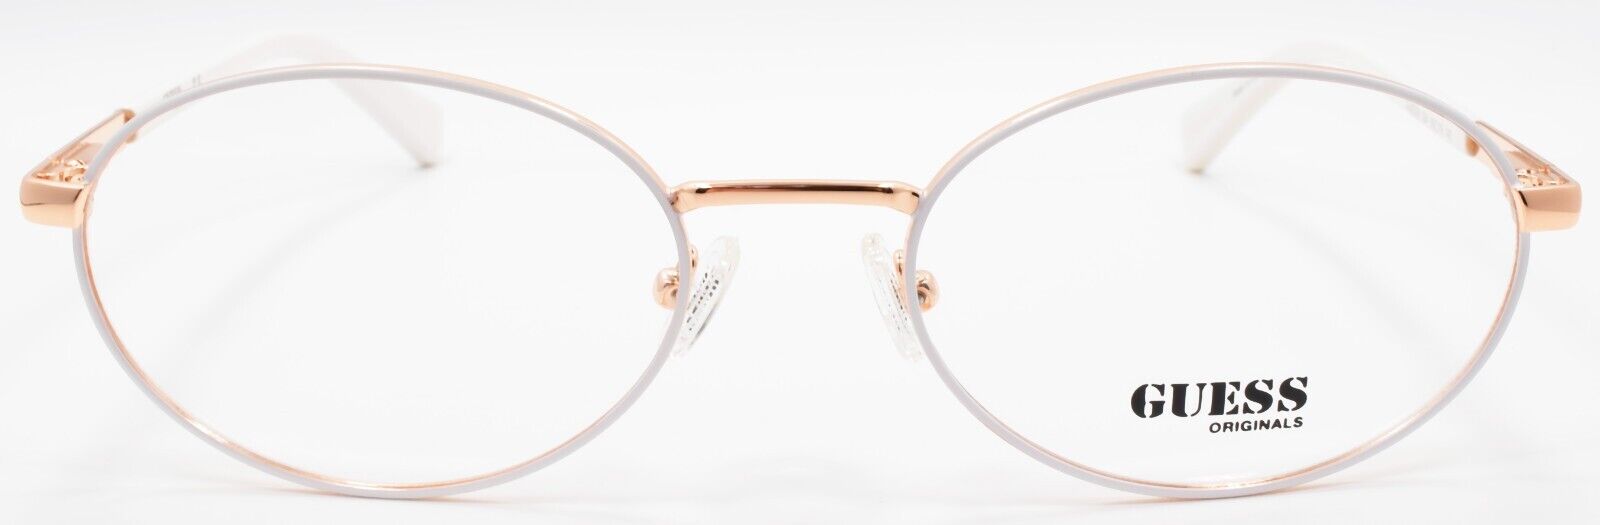 2-GUESS GU8239 024 Eyeglasses Frames 55-19-140 White / Rose Gold-889214282590-IKSpecs